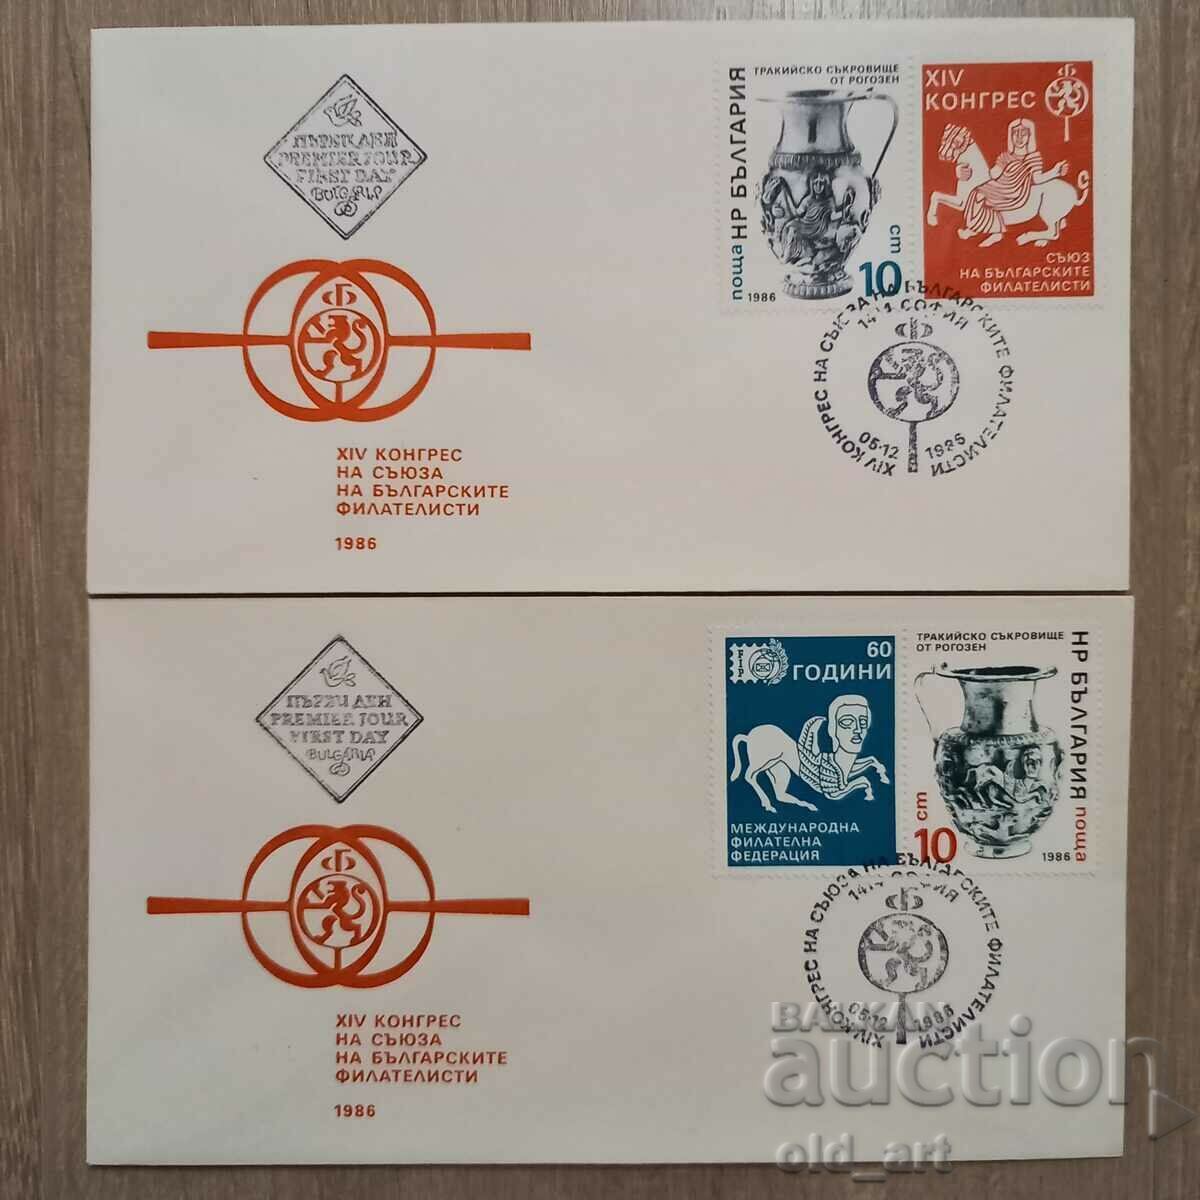 Postal envelopes - XIV Congress of the Union of Bulgarian philatelists